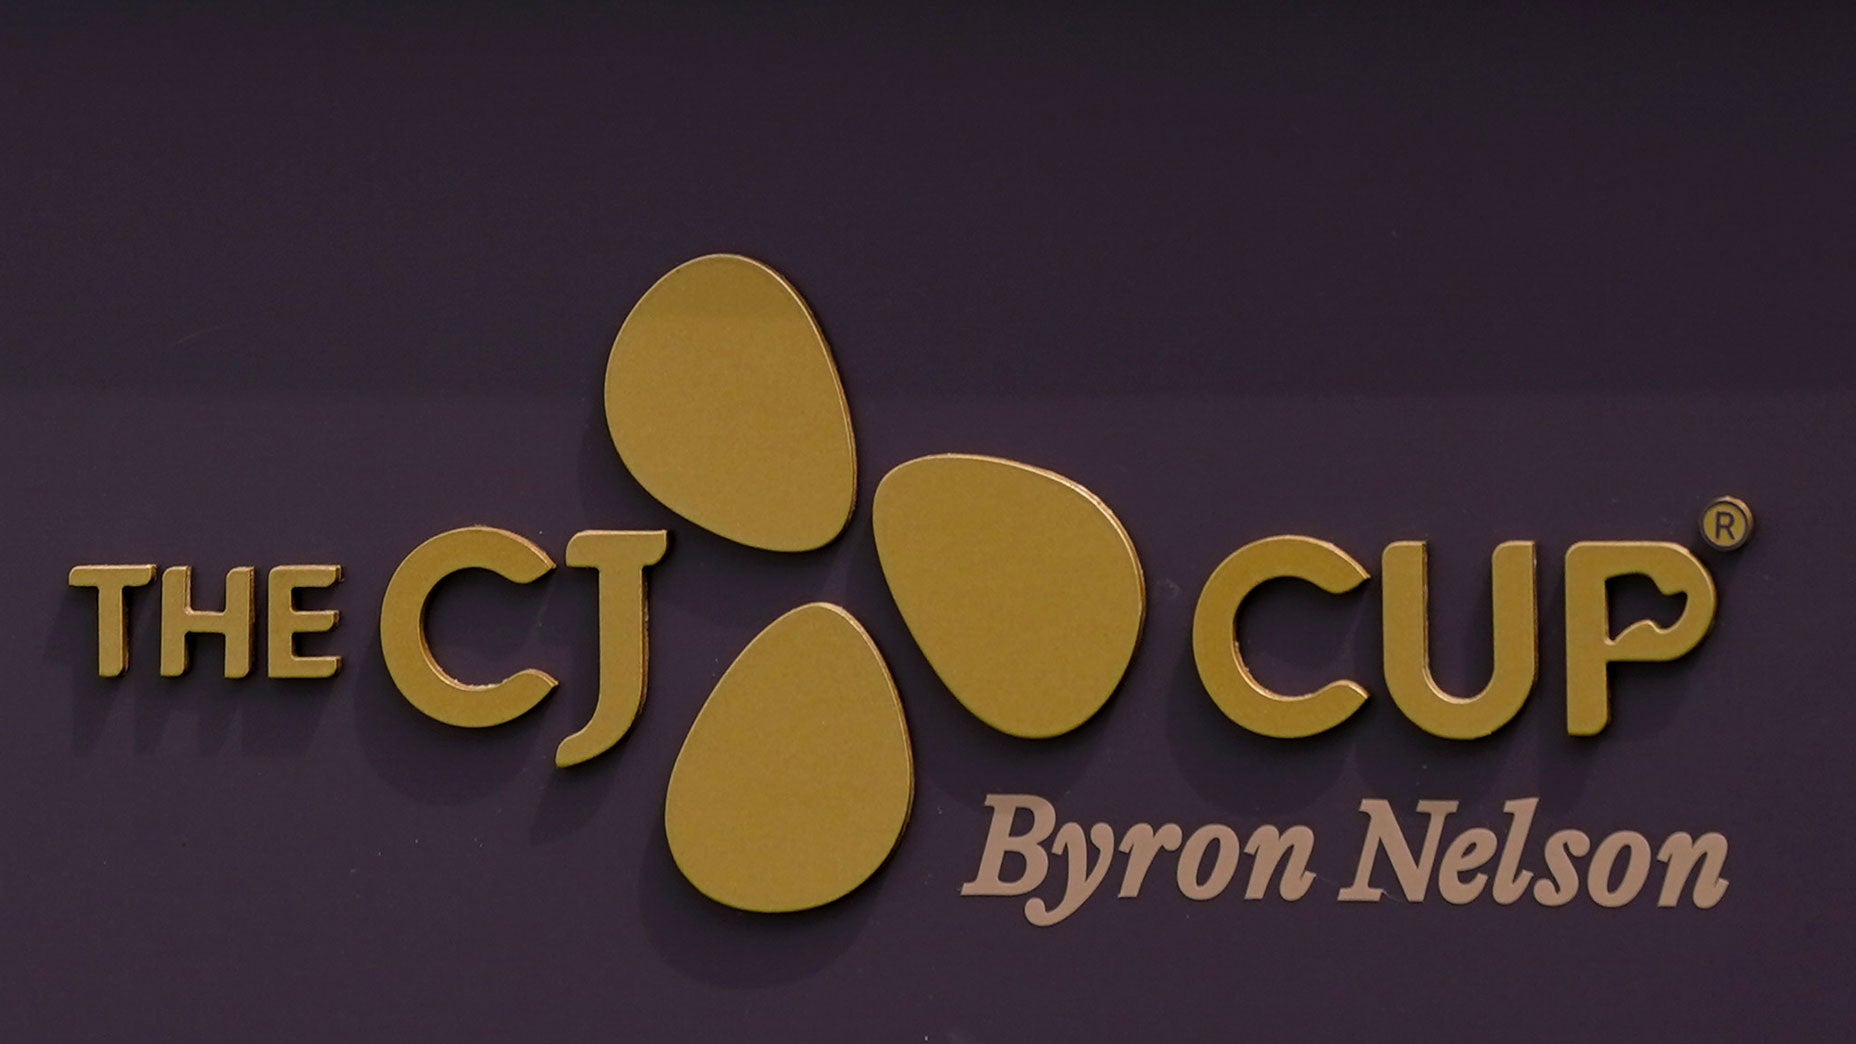 The CJ Cup Byron Nelson logo on trophy